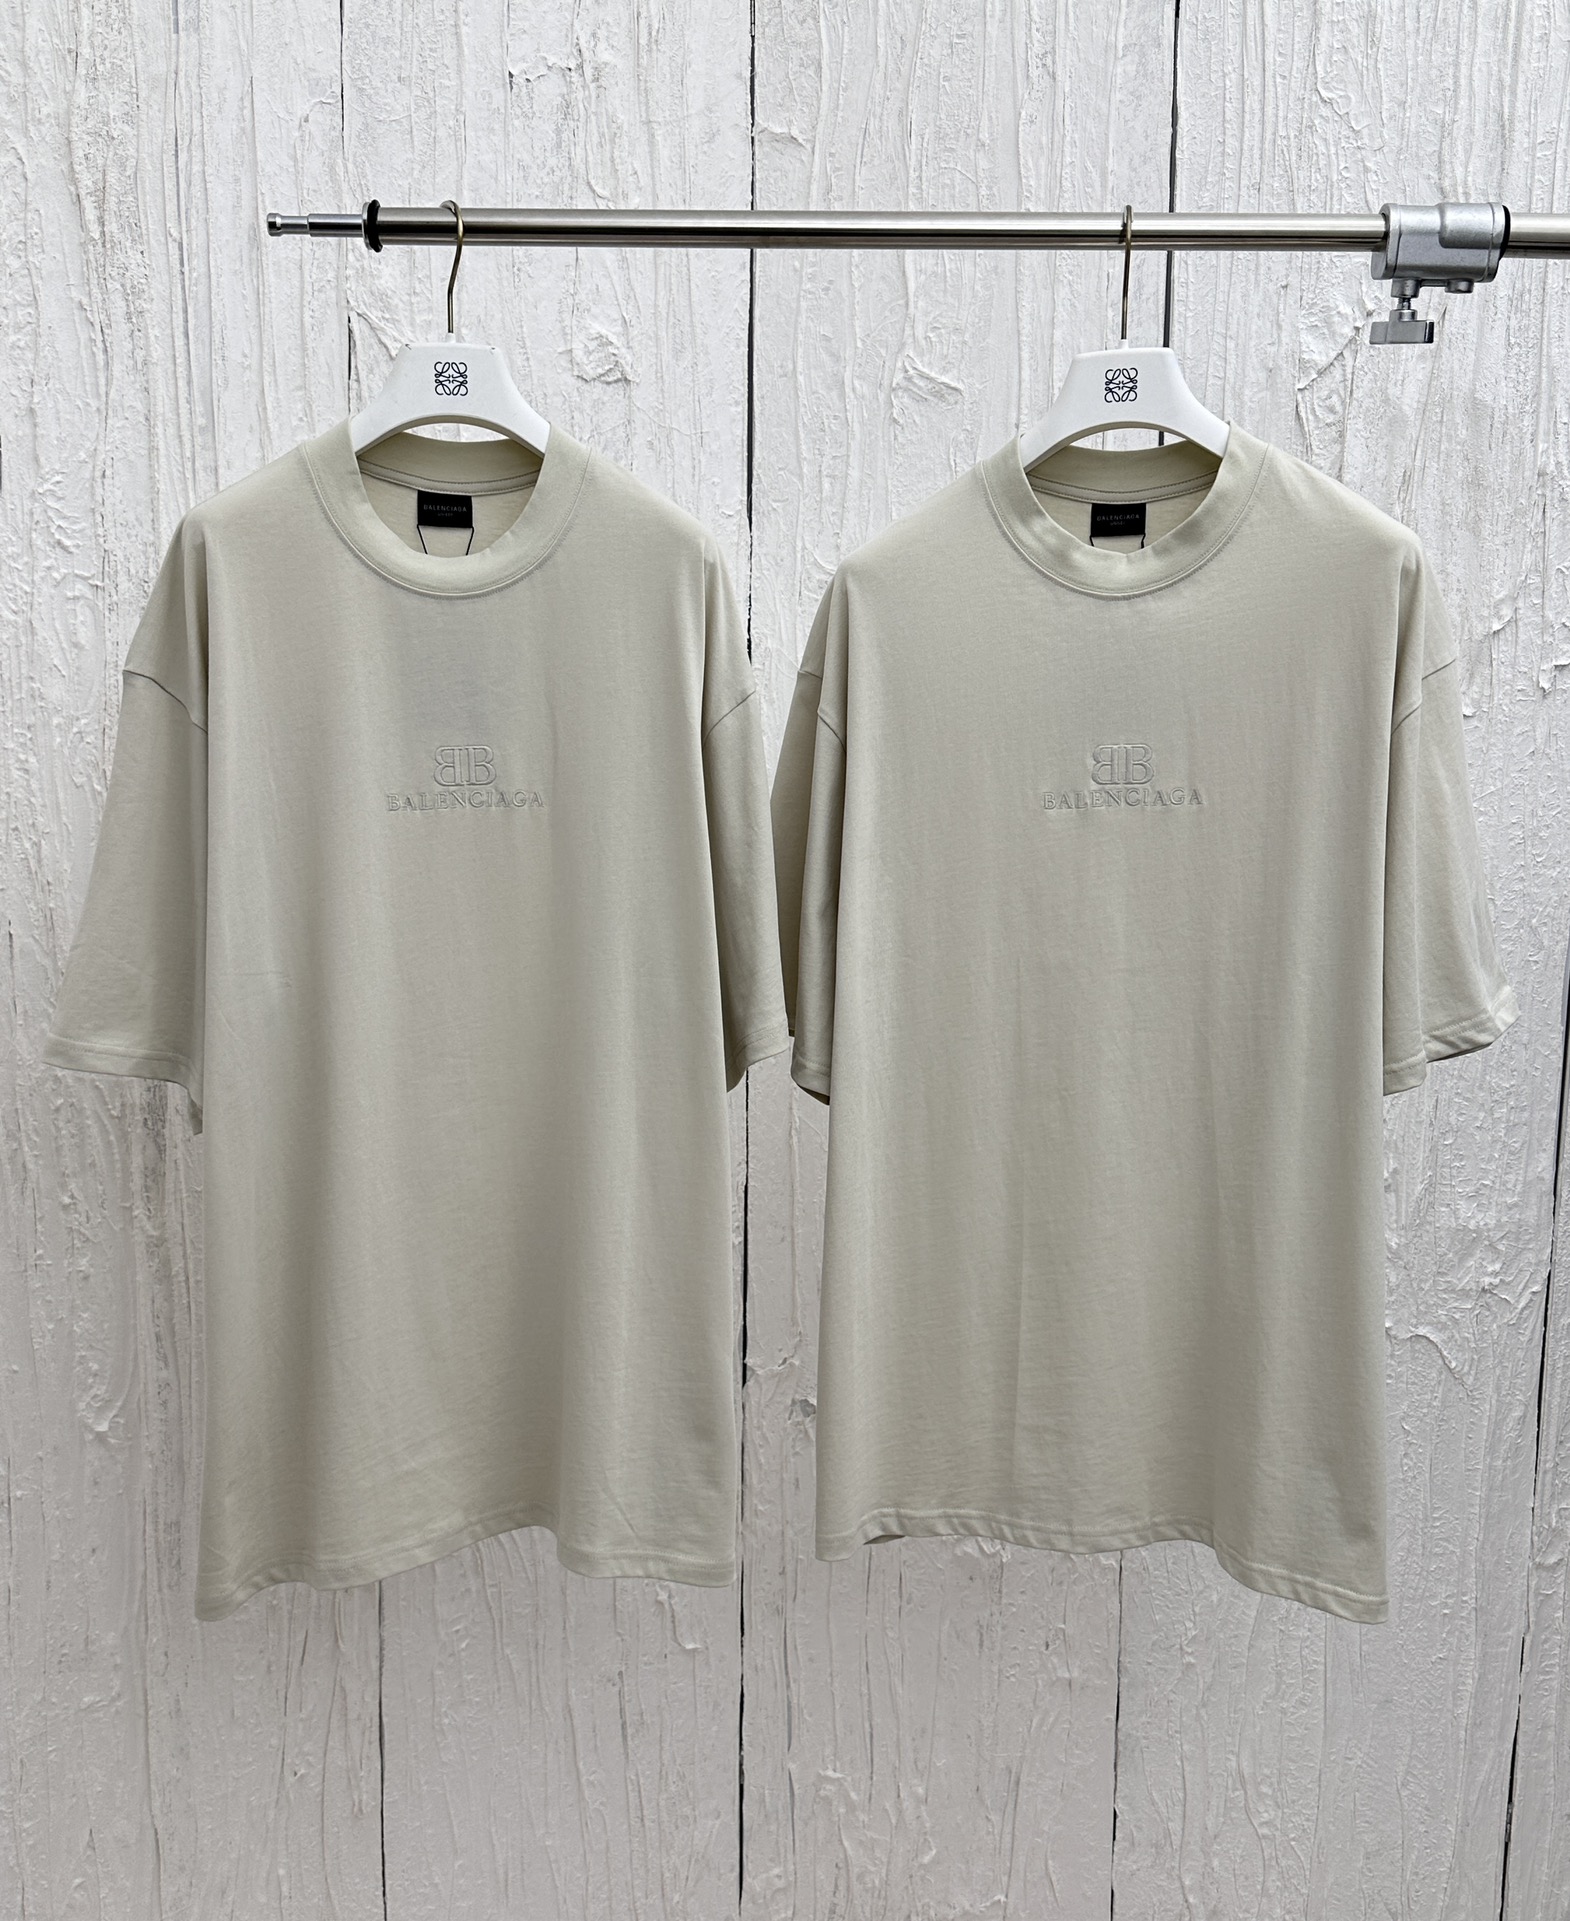 Balenciaga Clothing T-Shirt Embroidery Short Sleeve